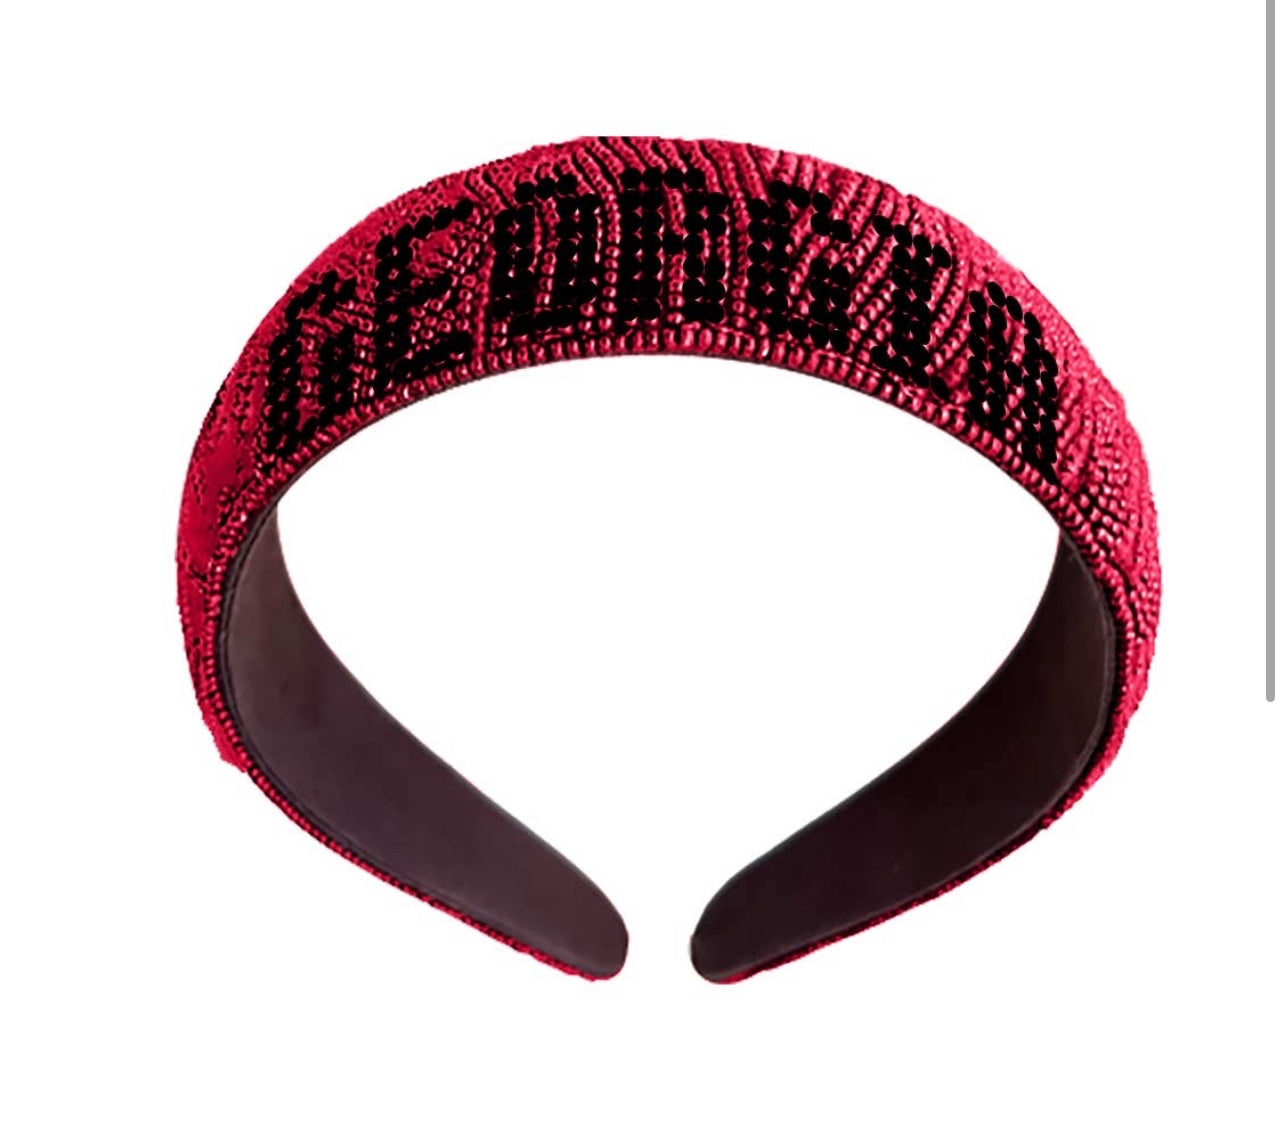 Red and black "Georgia" beaded headband.